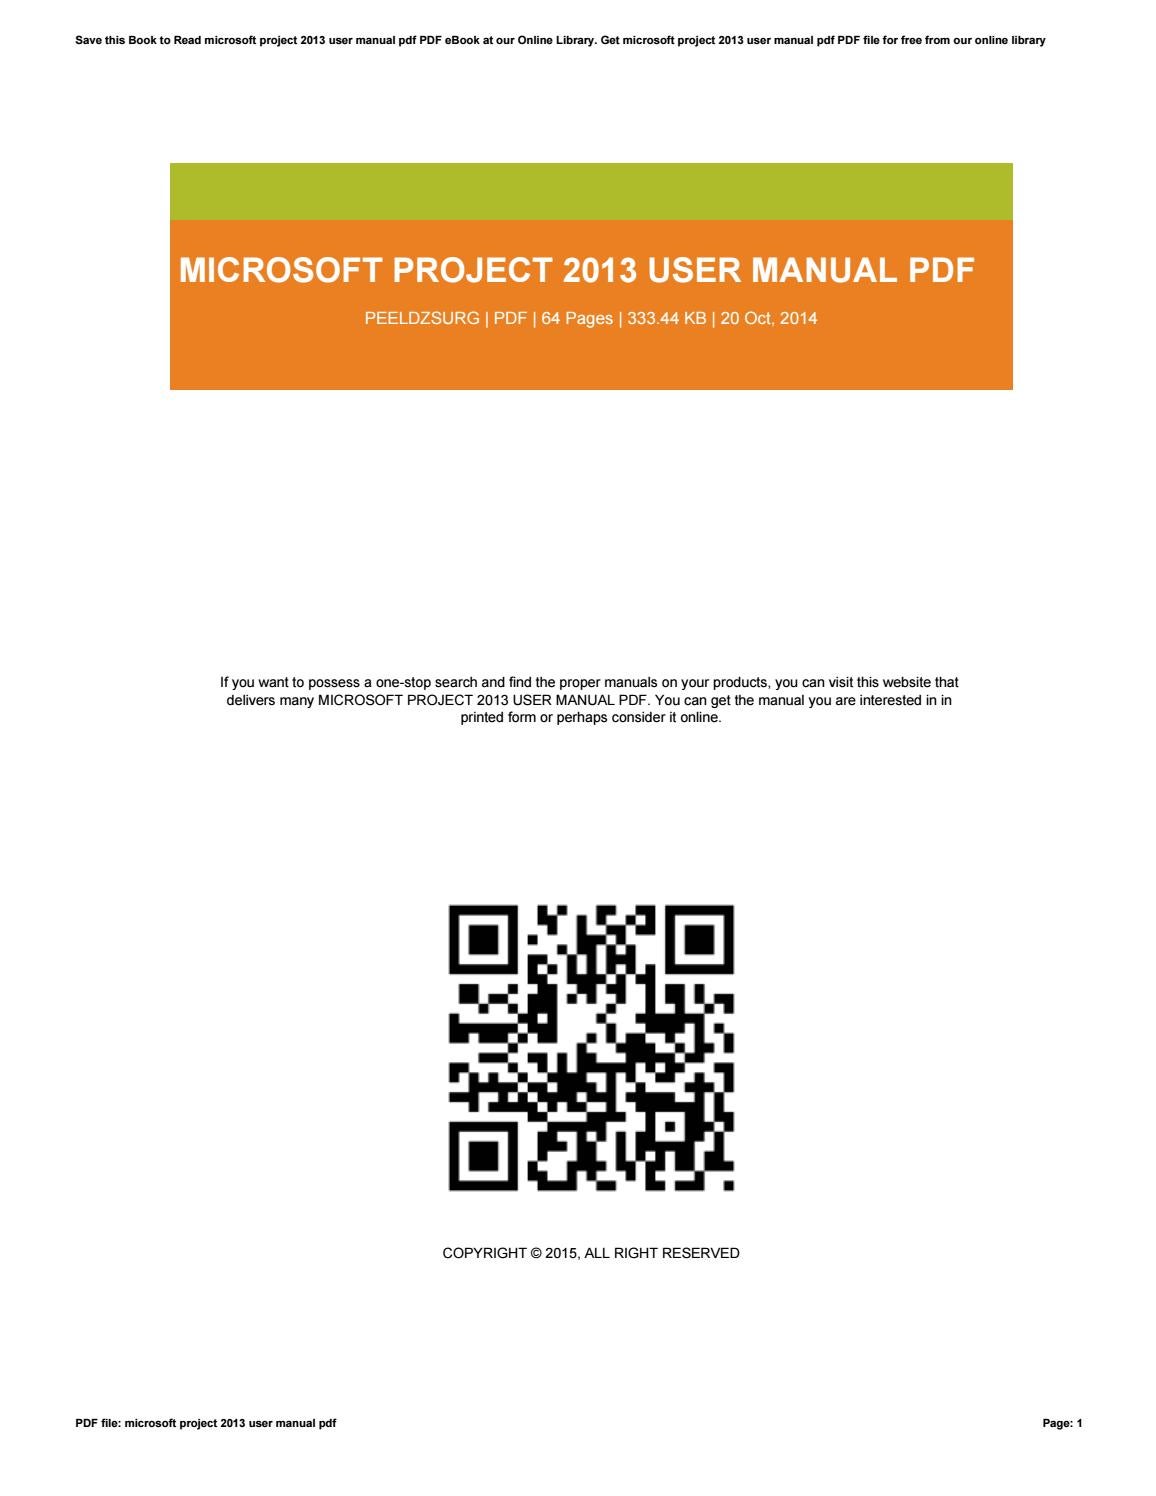 microsoft publisher 2013 user manual